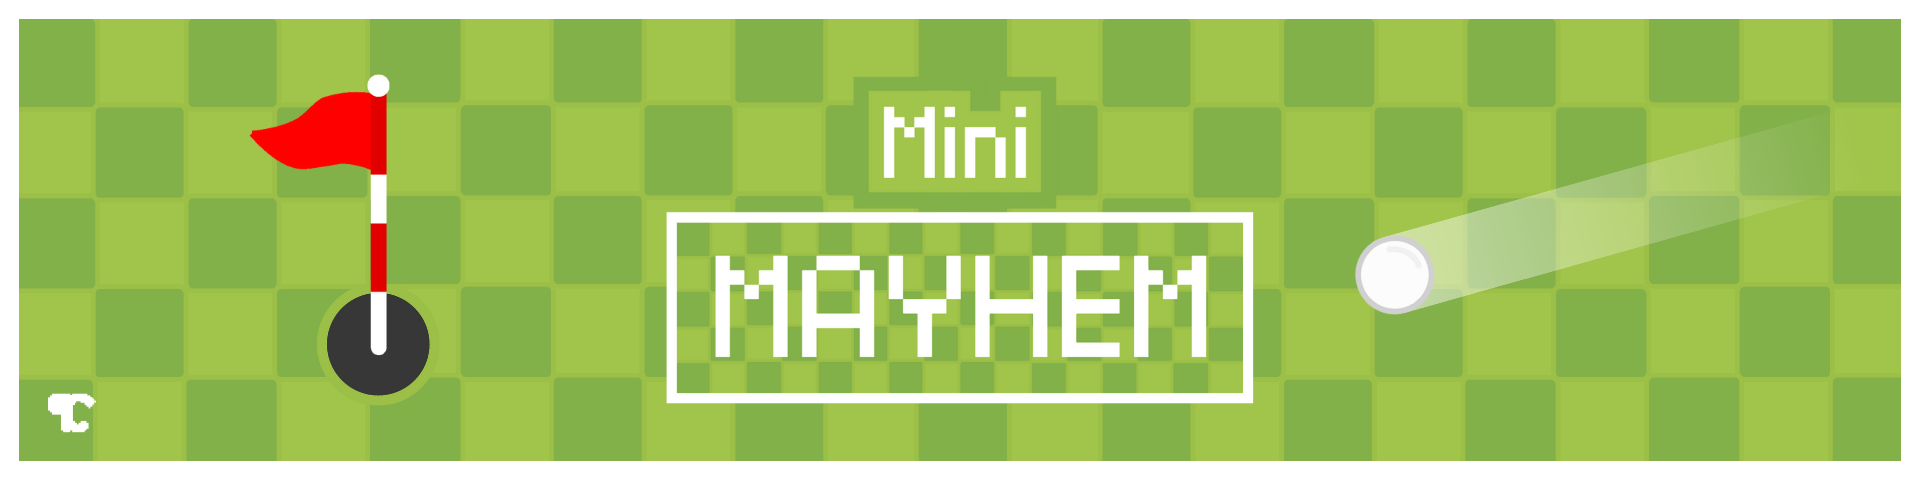 Mini Mayhem